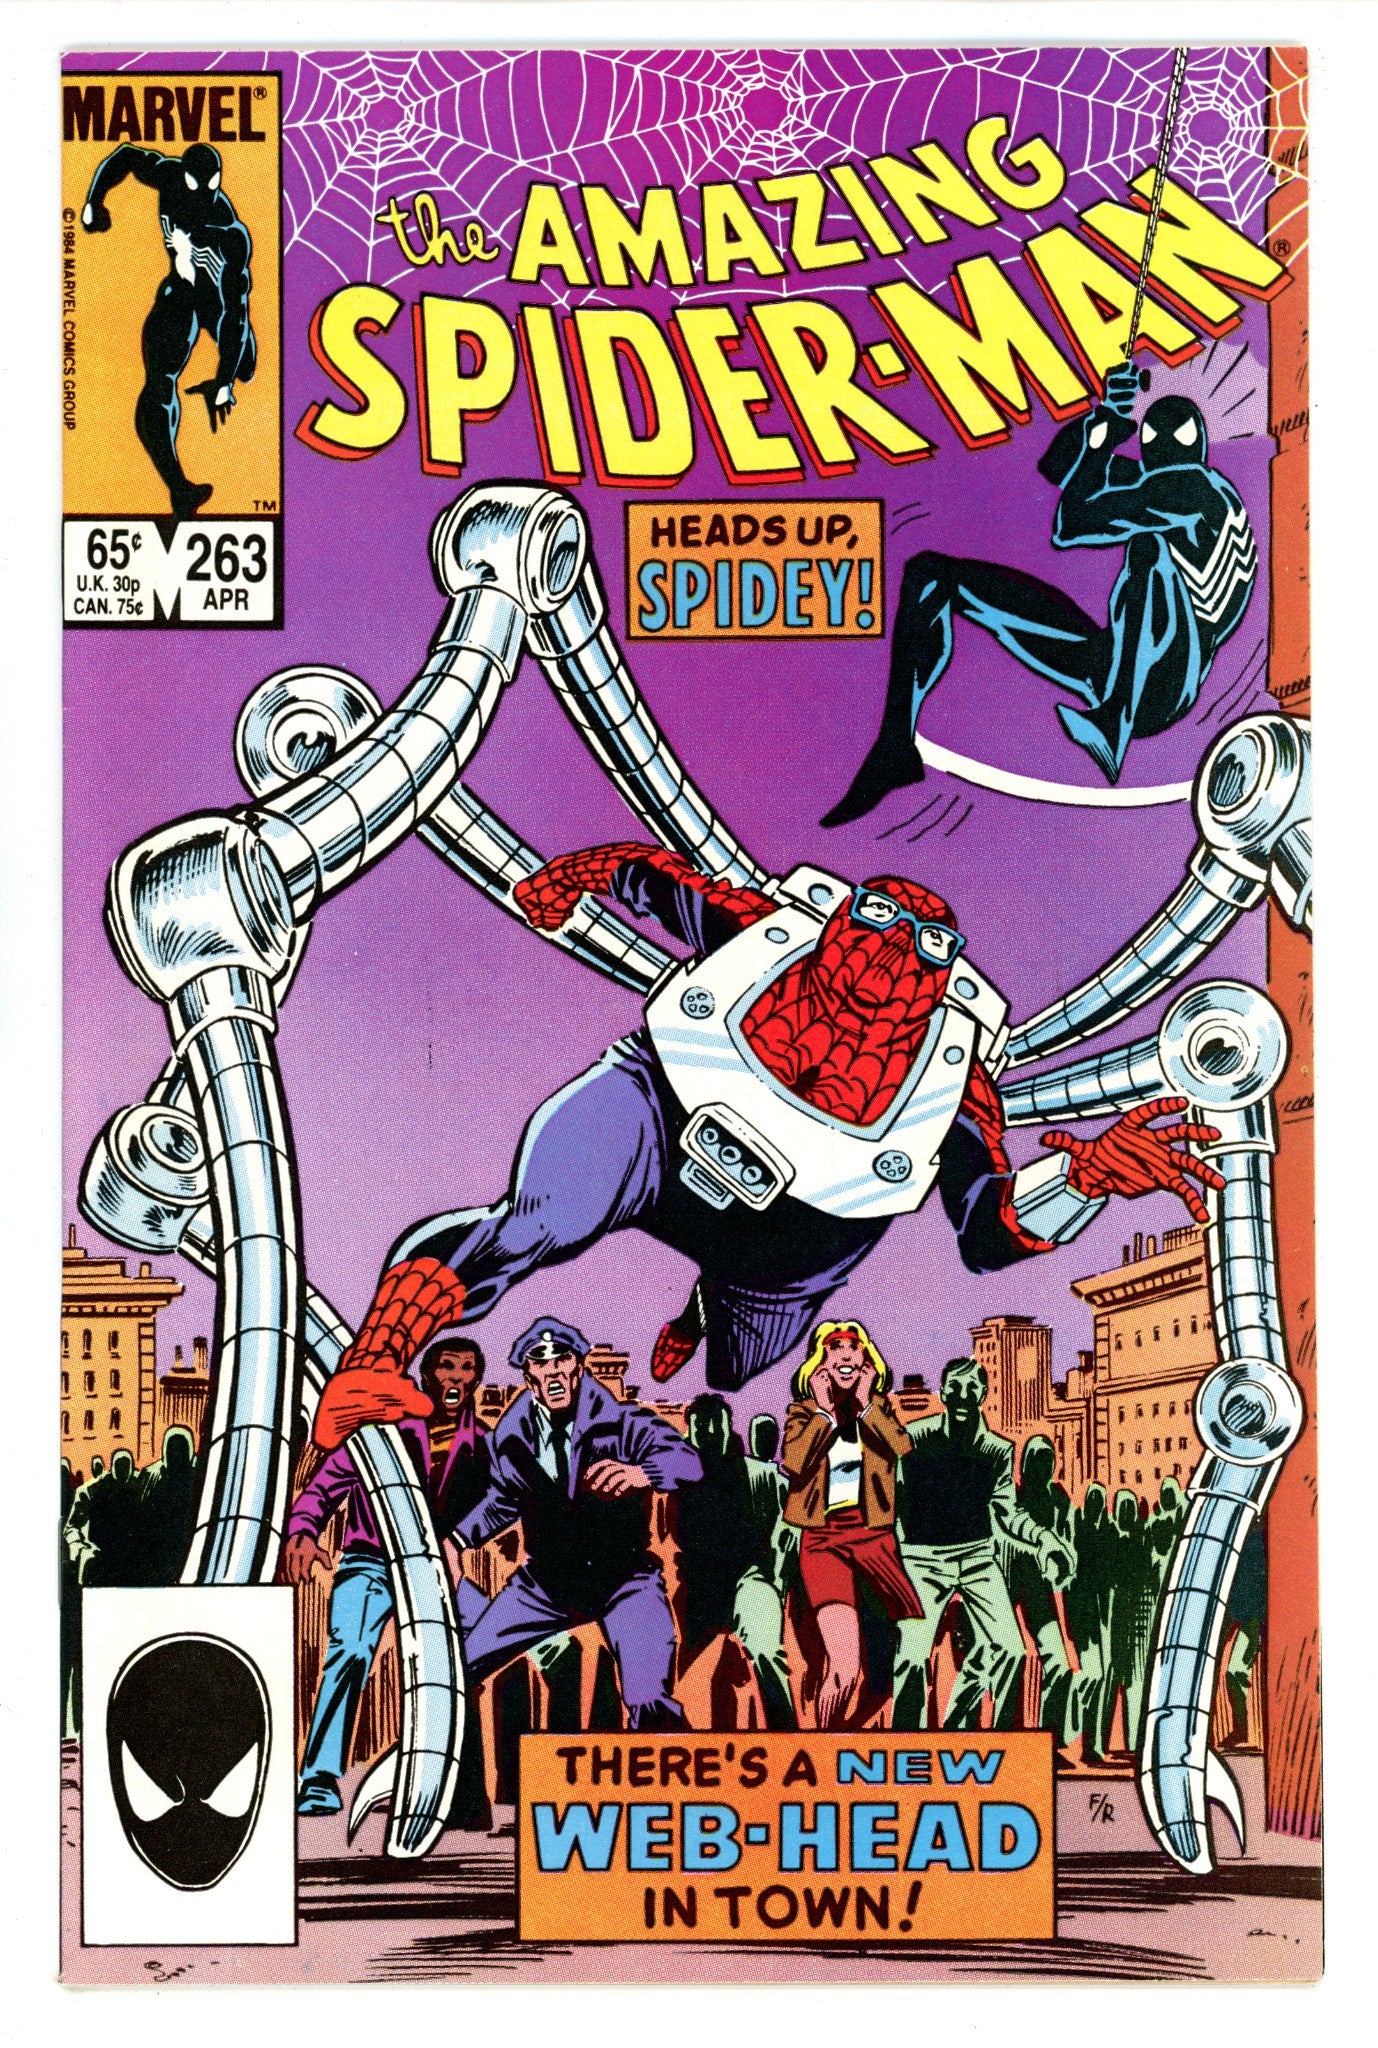 The Amazing Spider-Man Vol 1 263 VF+ (8.5) (1985) 